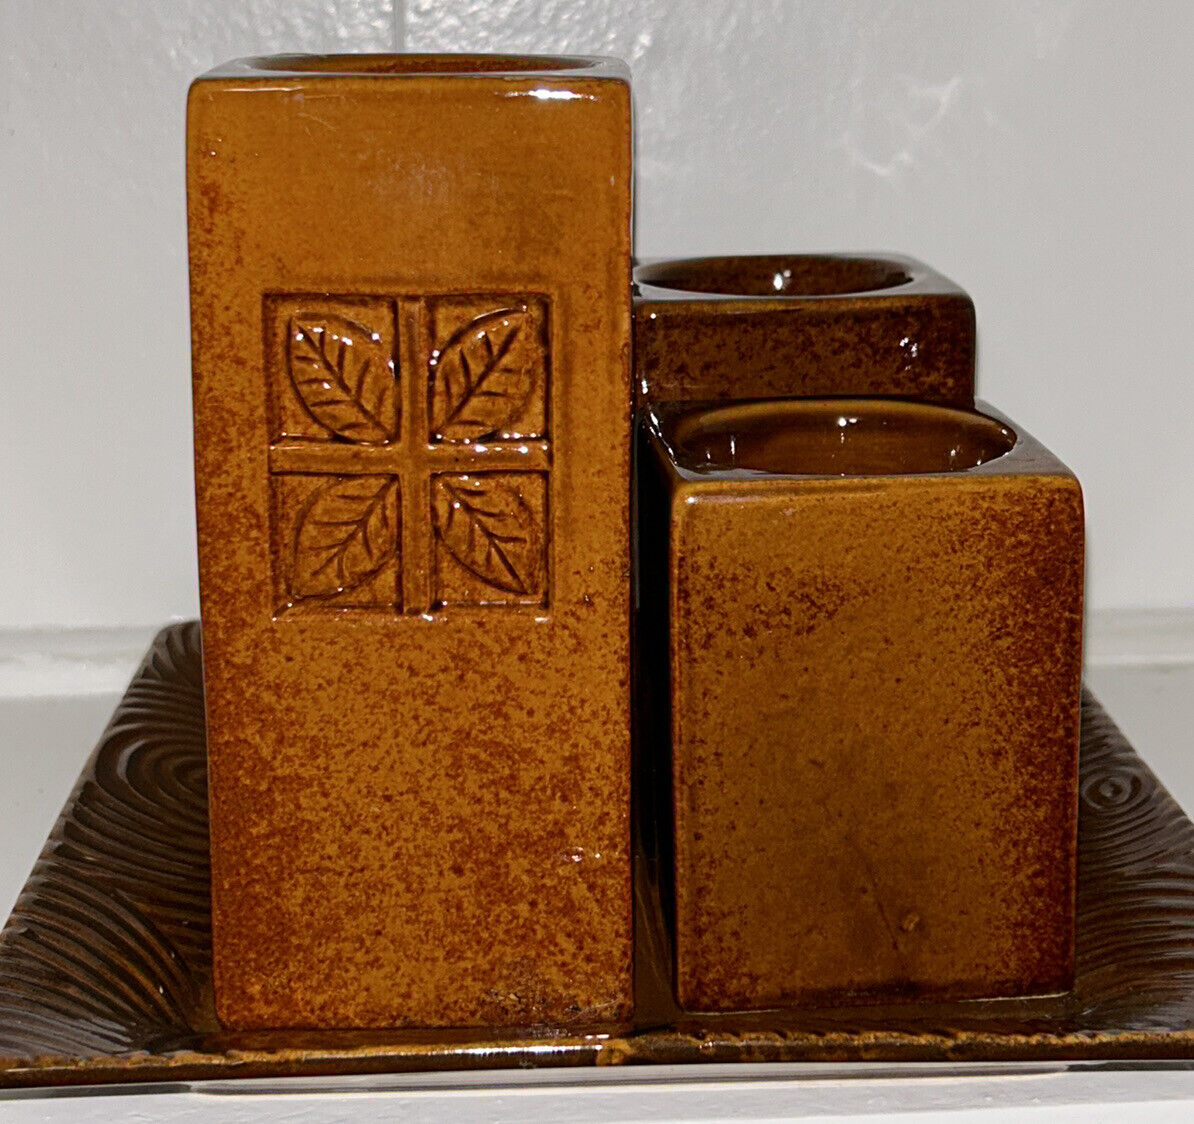 4 Piece Brown Ceramic Tea Light Votive Candle Holder Set w/Tray Vintage